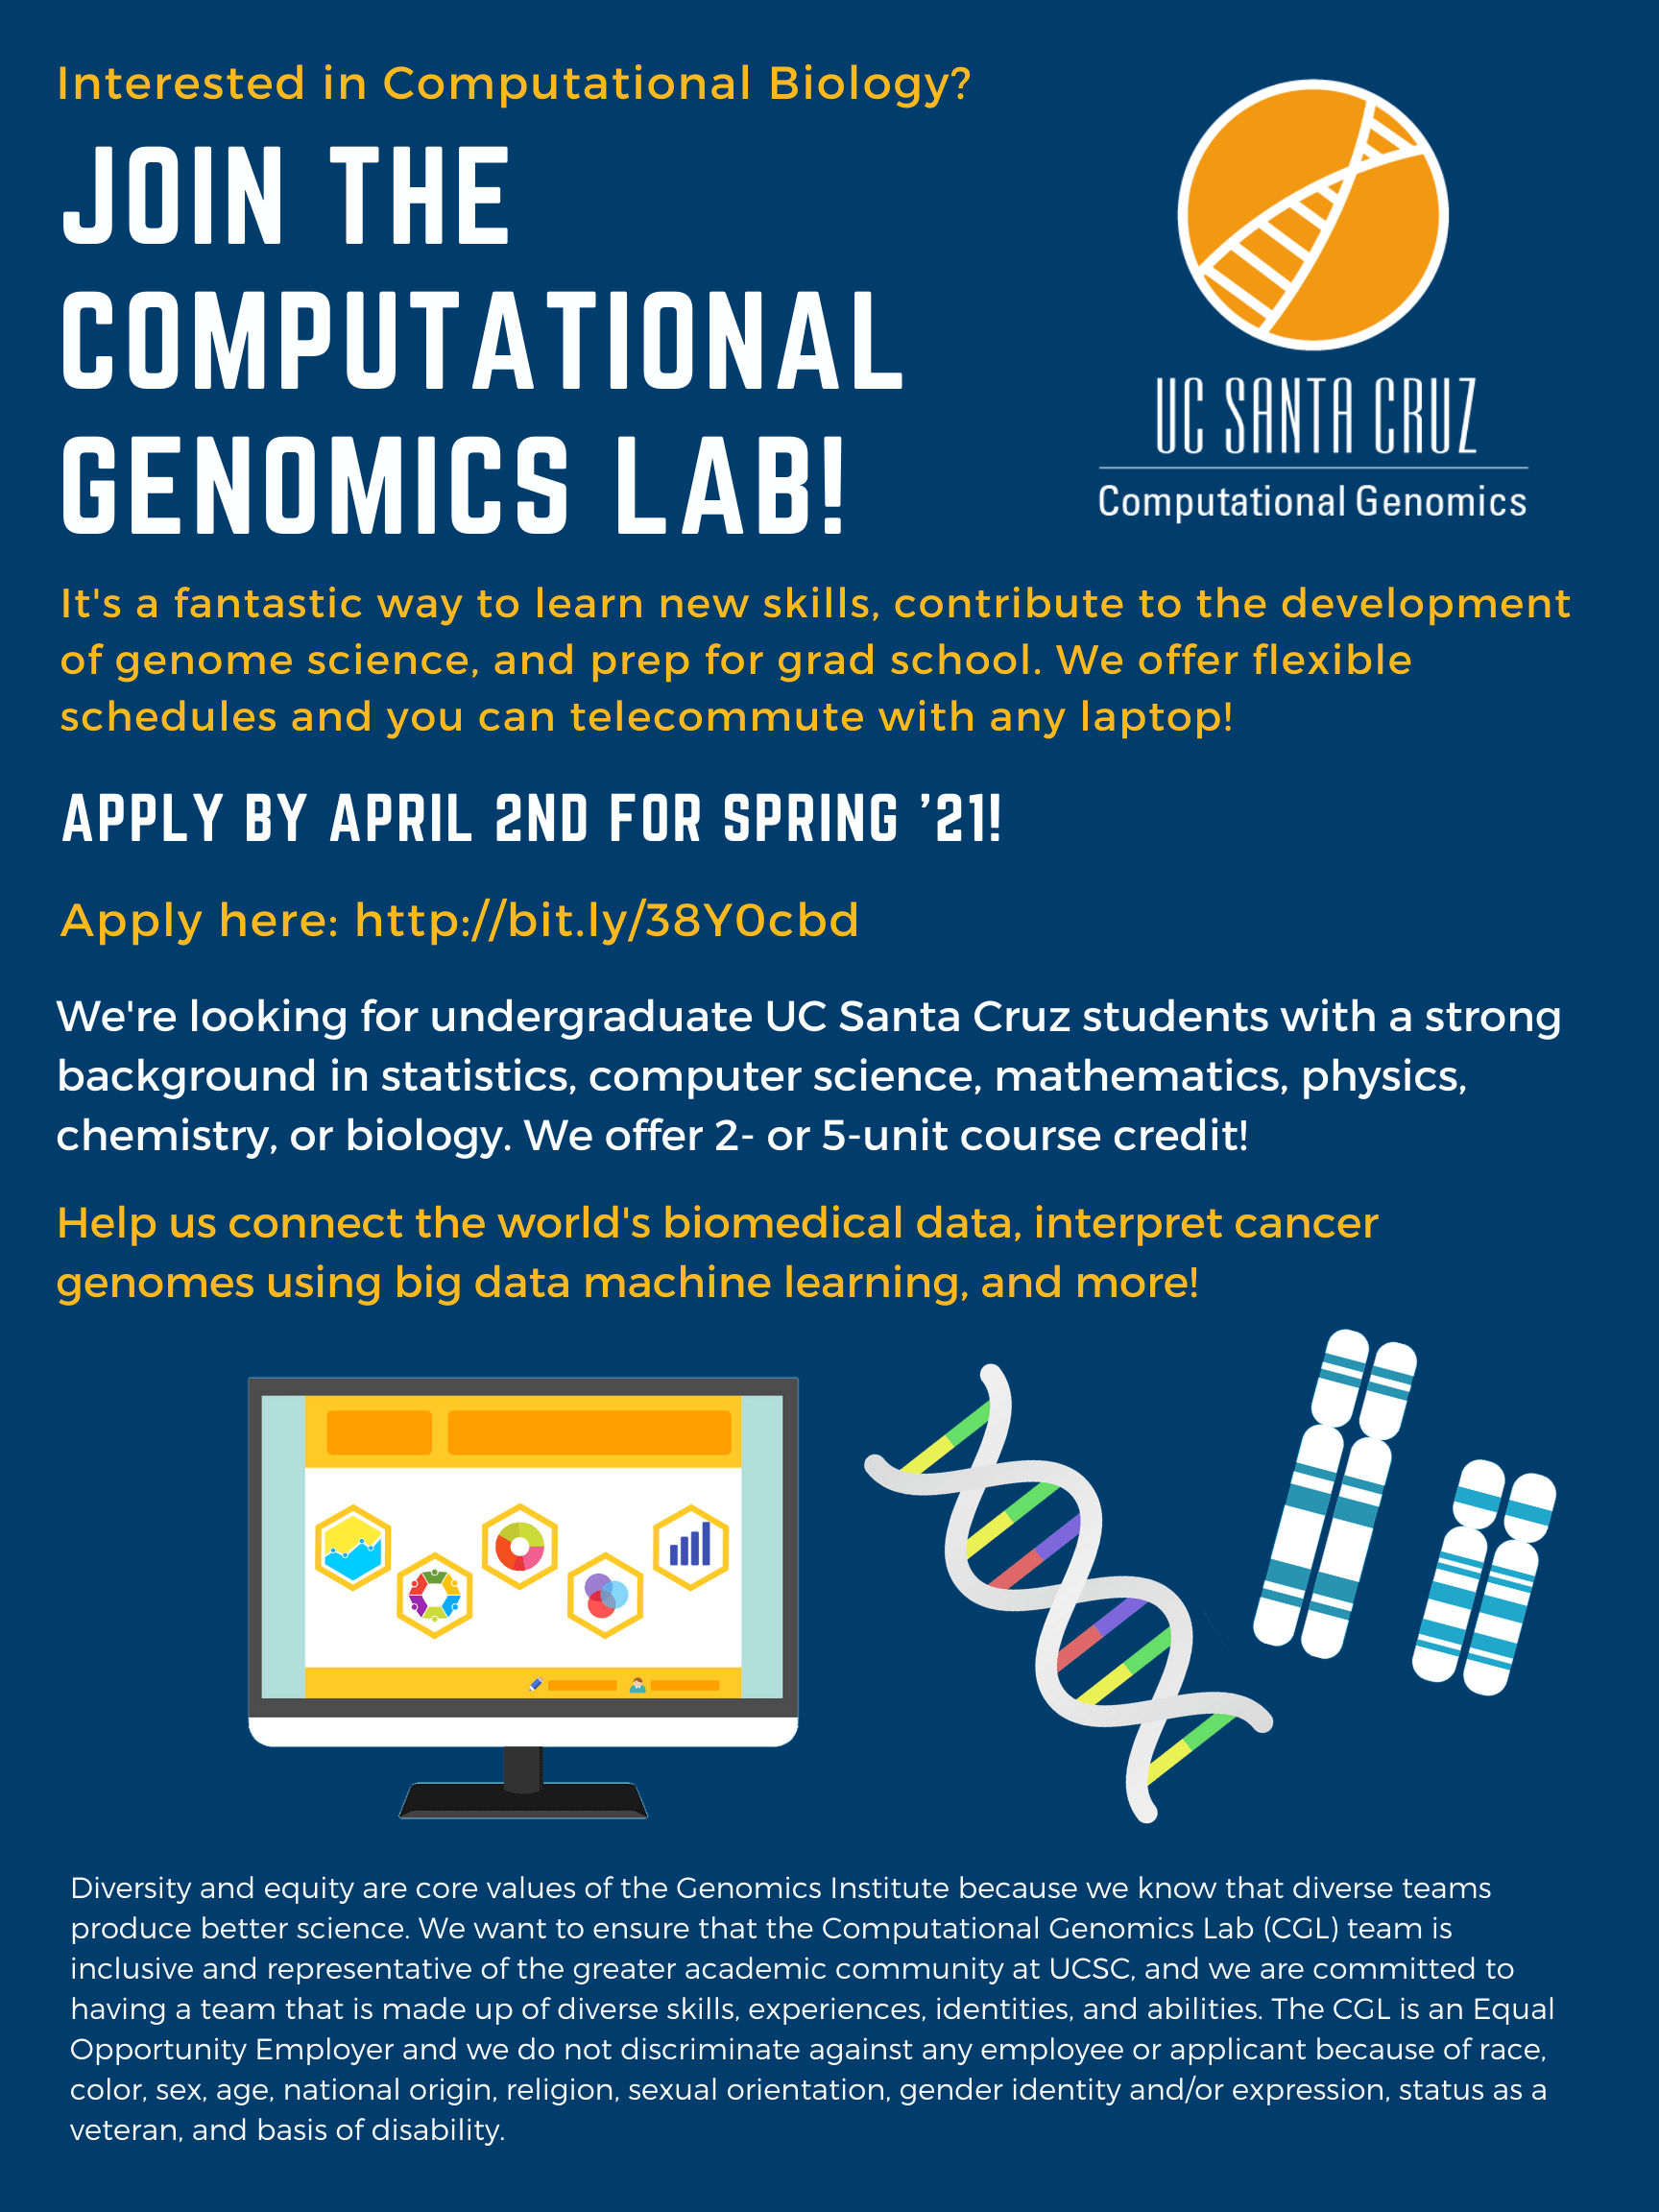 Opportunities | Computational Genomics Laboratory (CGL)